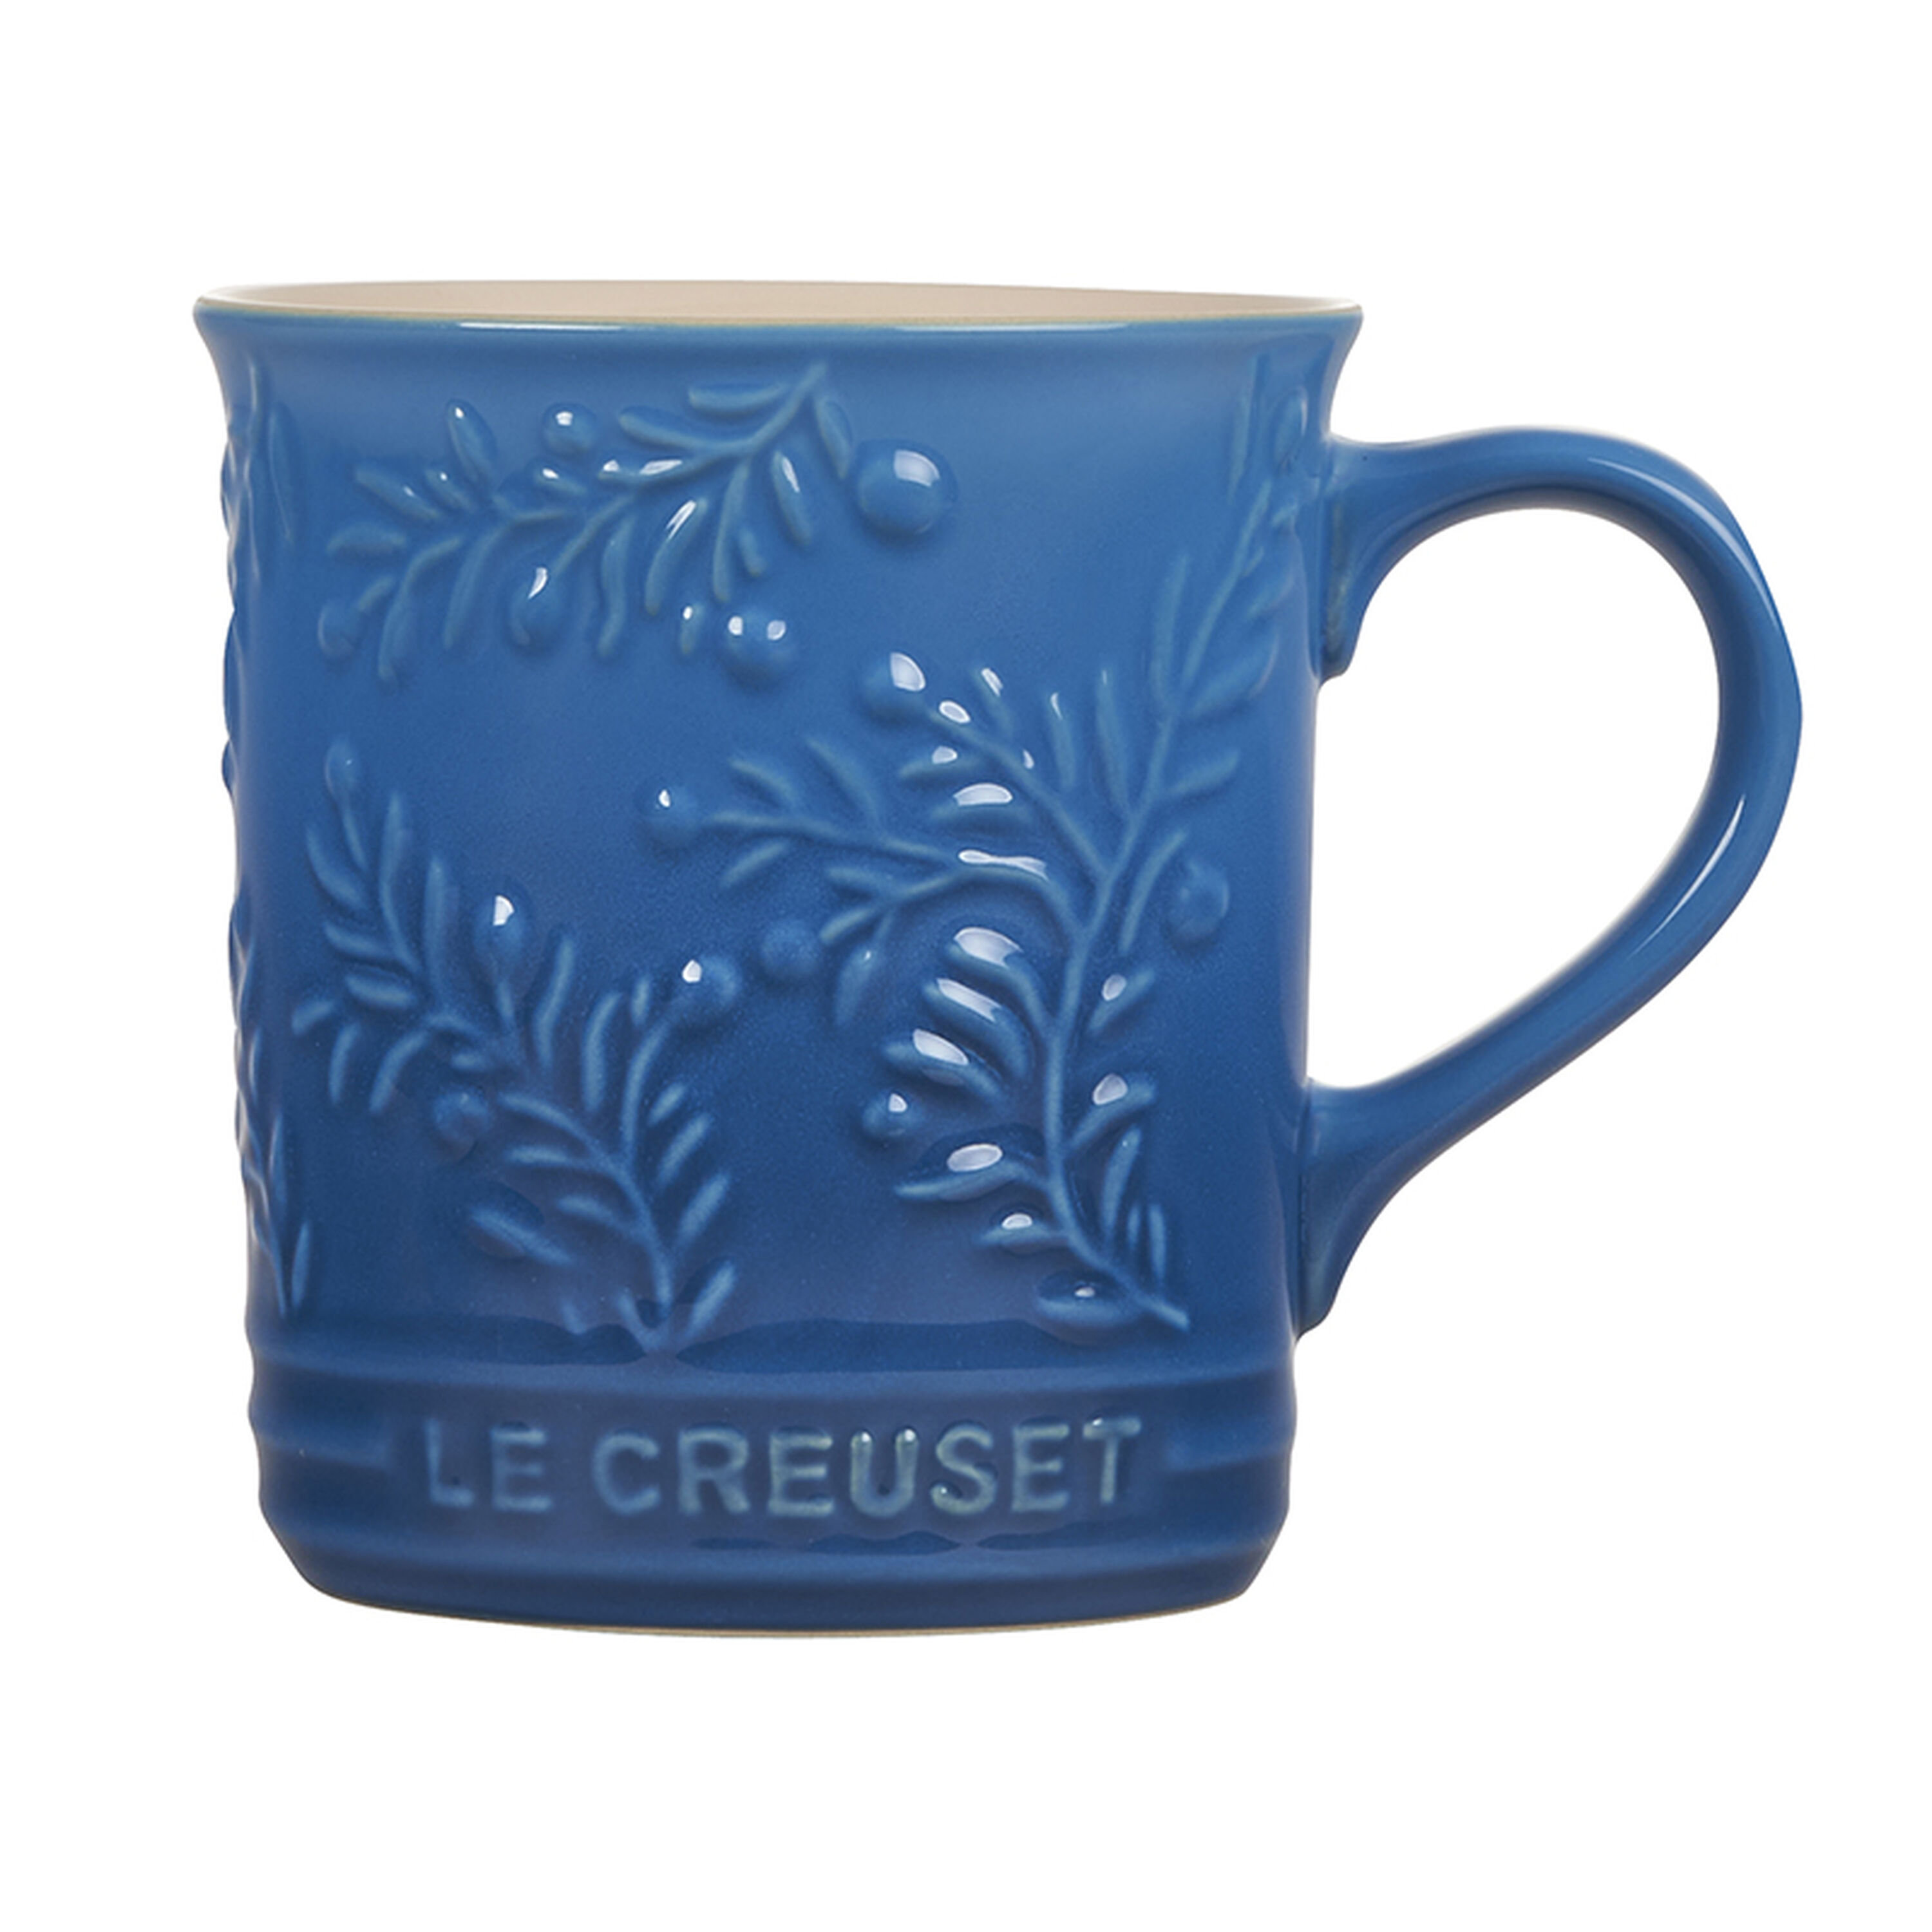 Le Creuset Stoneware Mug, 14 oz., Marseille